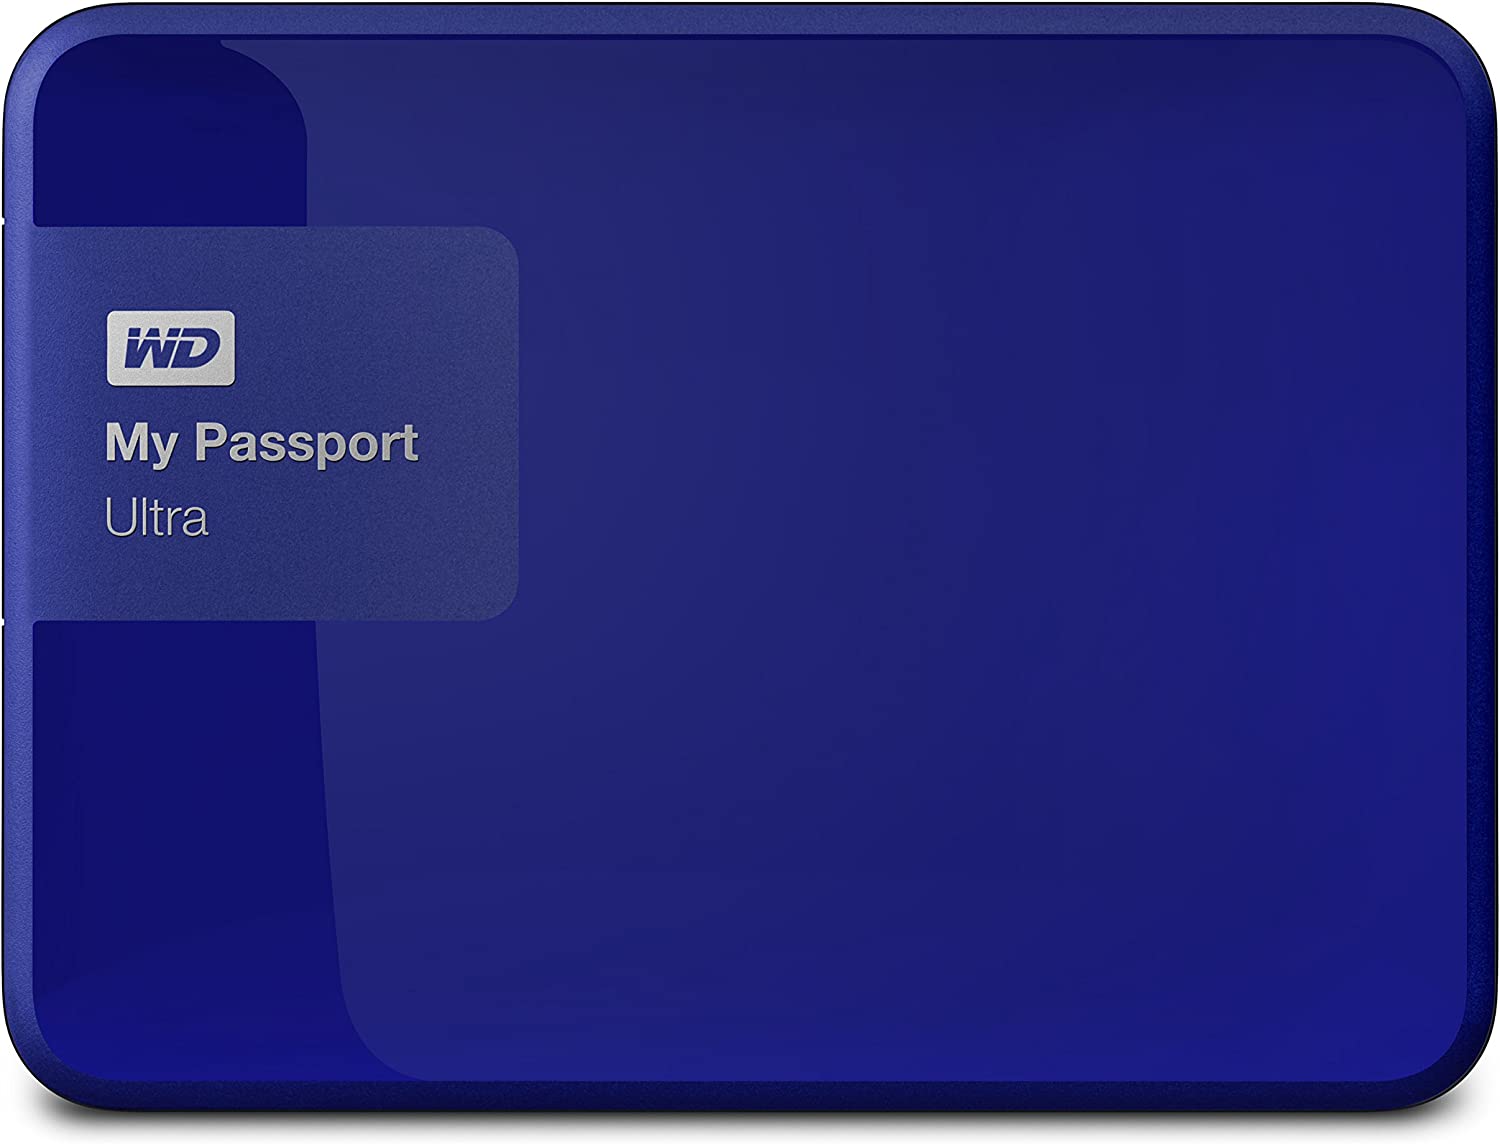 Western Digital WD My Passport Ultra 3TB